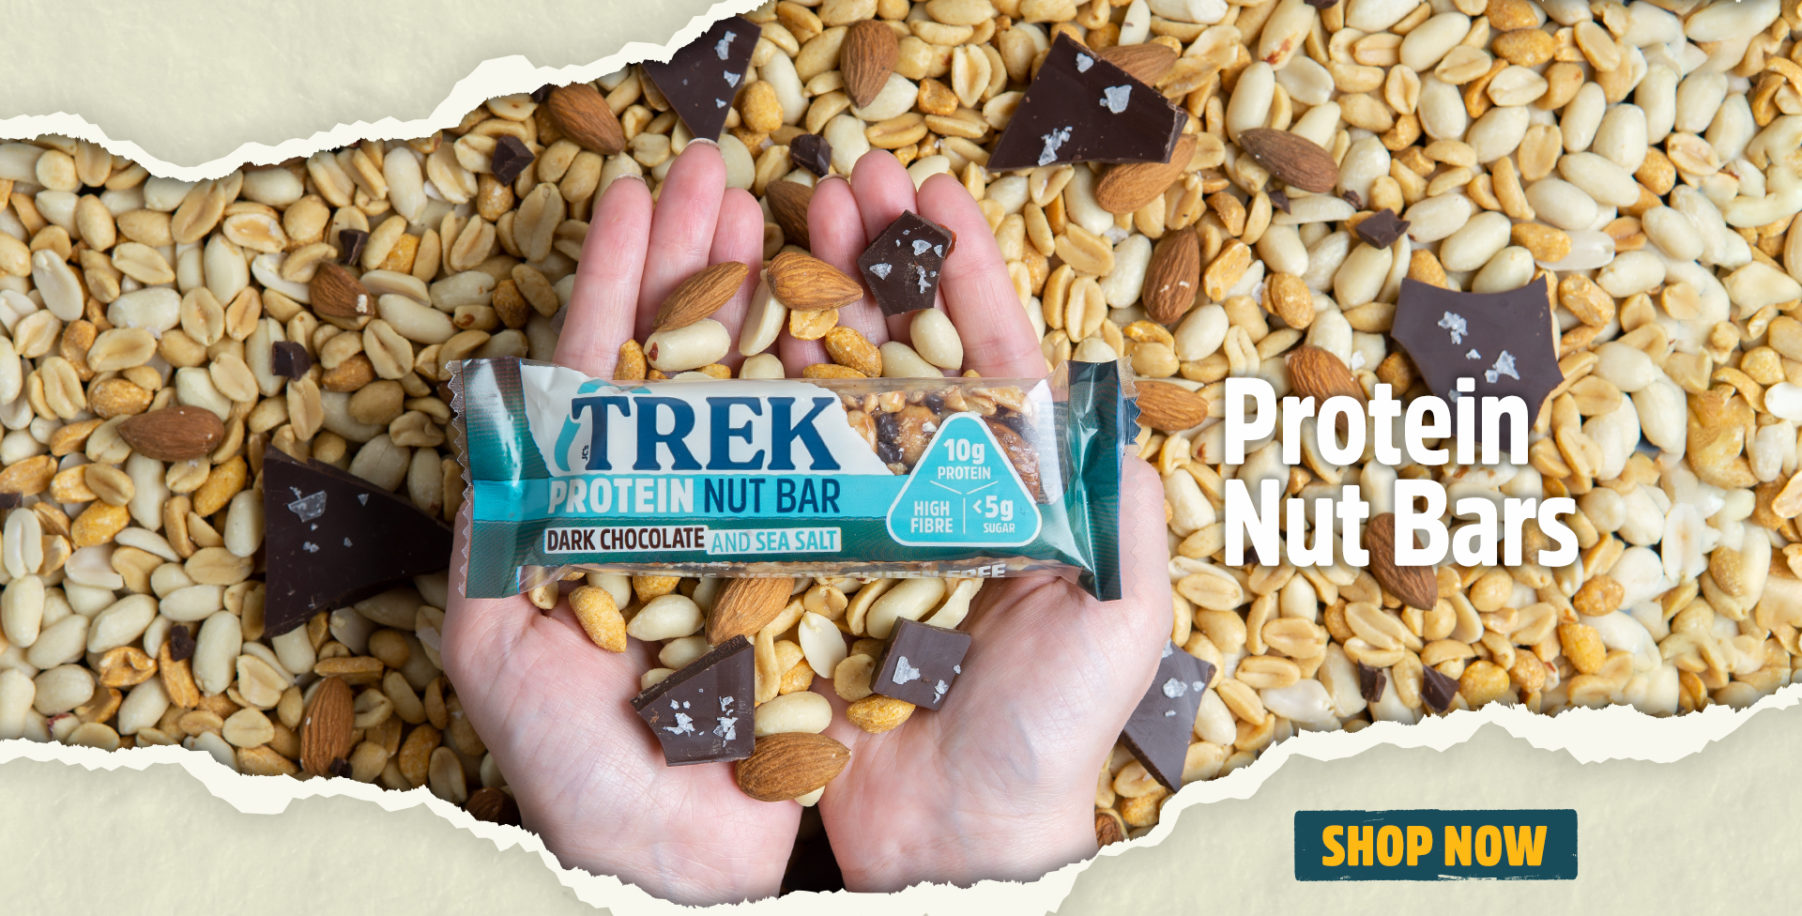 are trek protein bars healthy